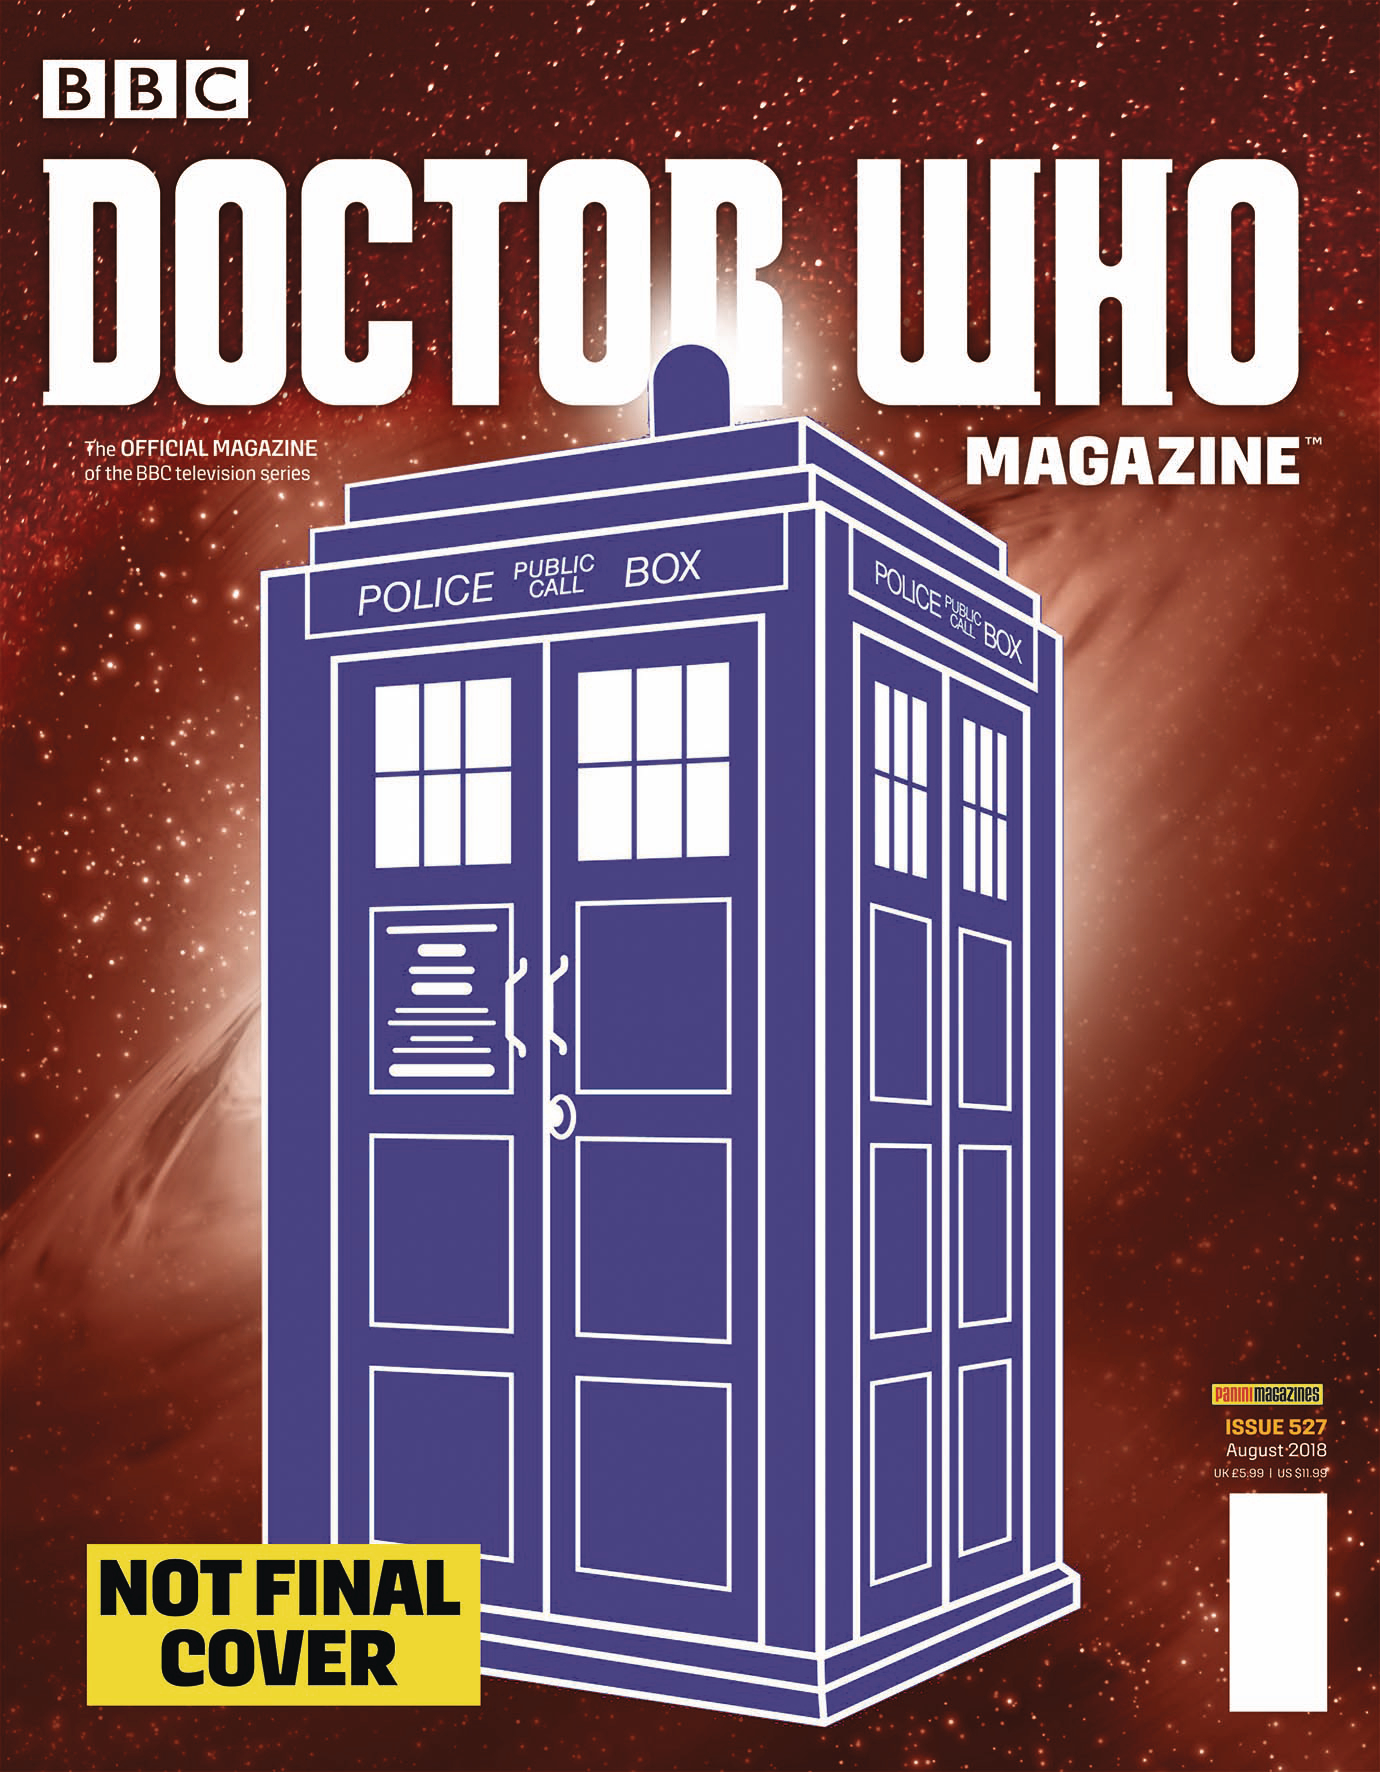 DOCTOR WHO MAGAZINE #527